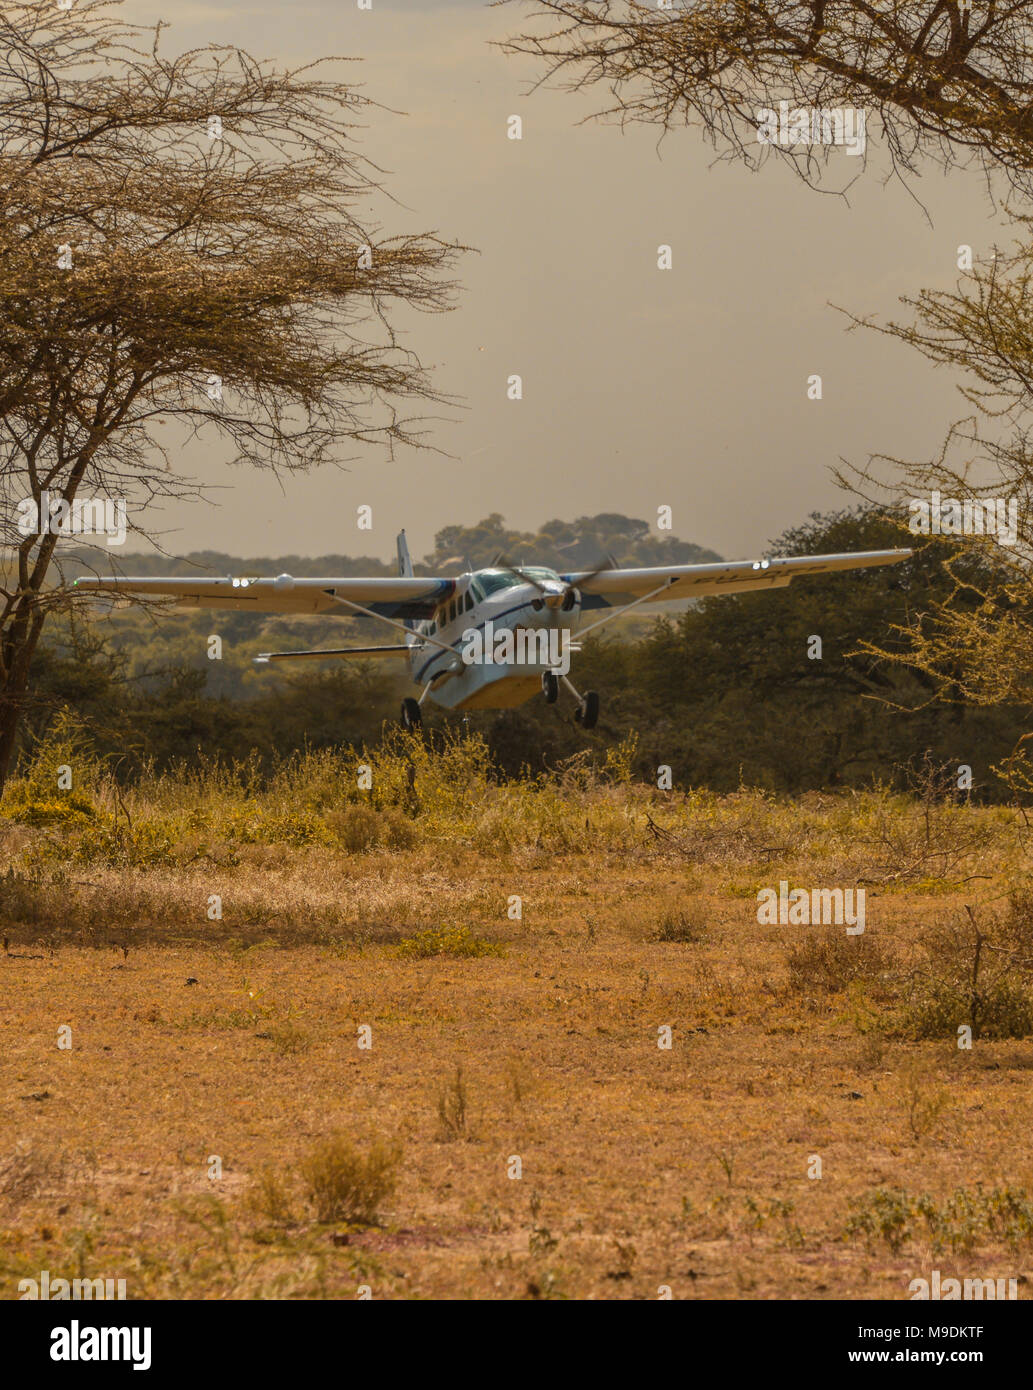 A Cessna 208 Caravan landing on a dirt airstrip in the Serengeti, Tanzania, Africa. Stock Photo